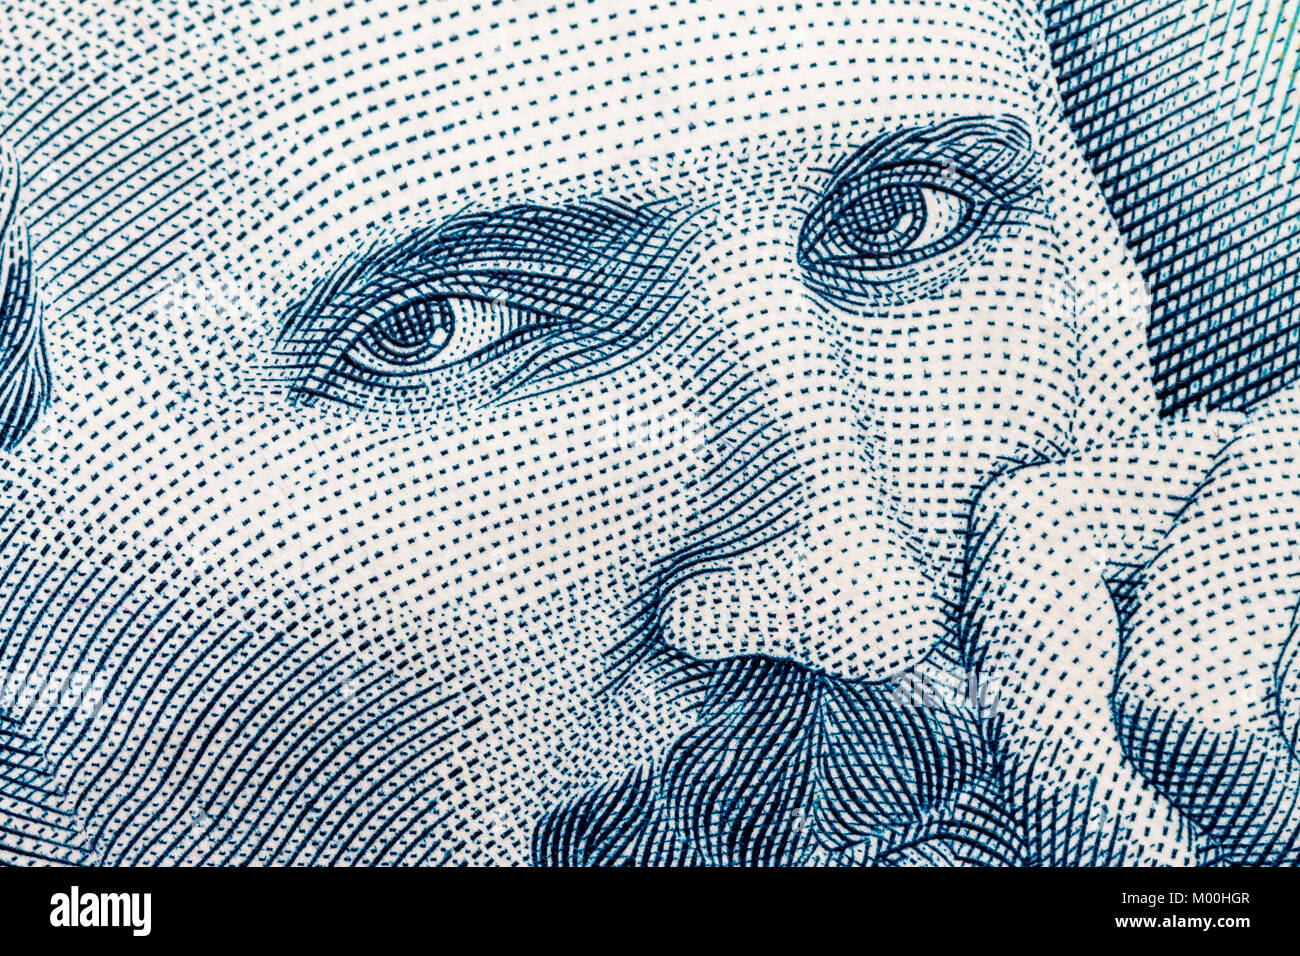 Portrait des Wissenschaftlers Nikola Tesla Stockfoto